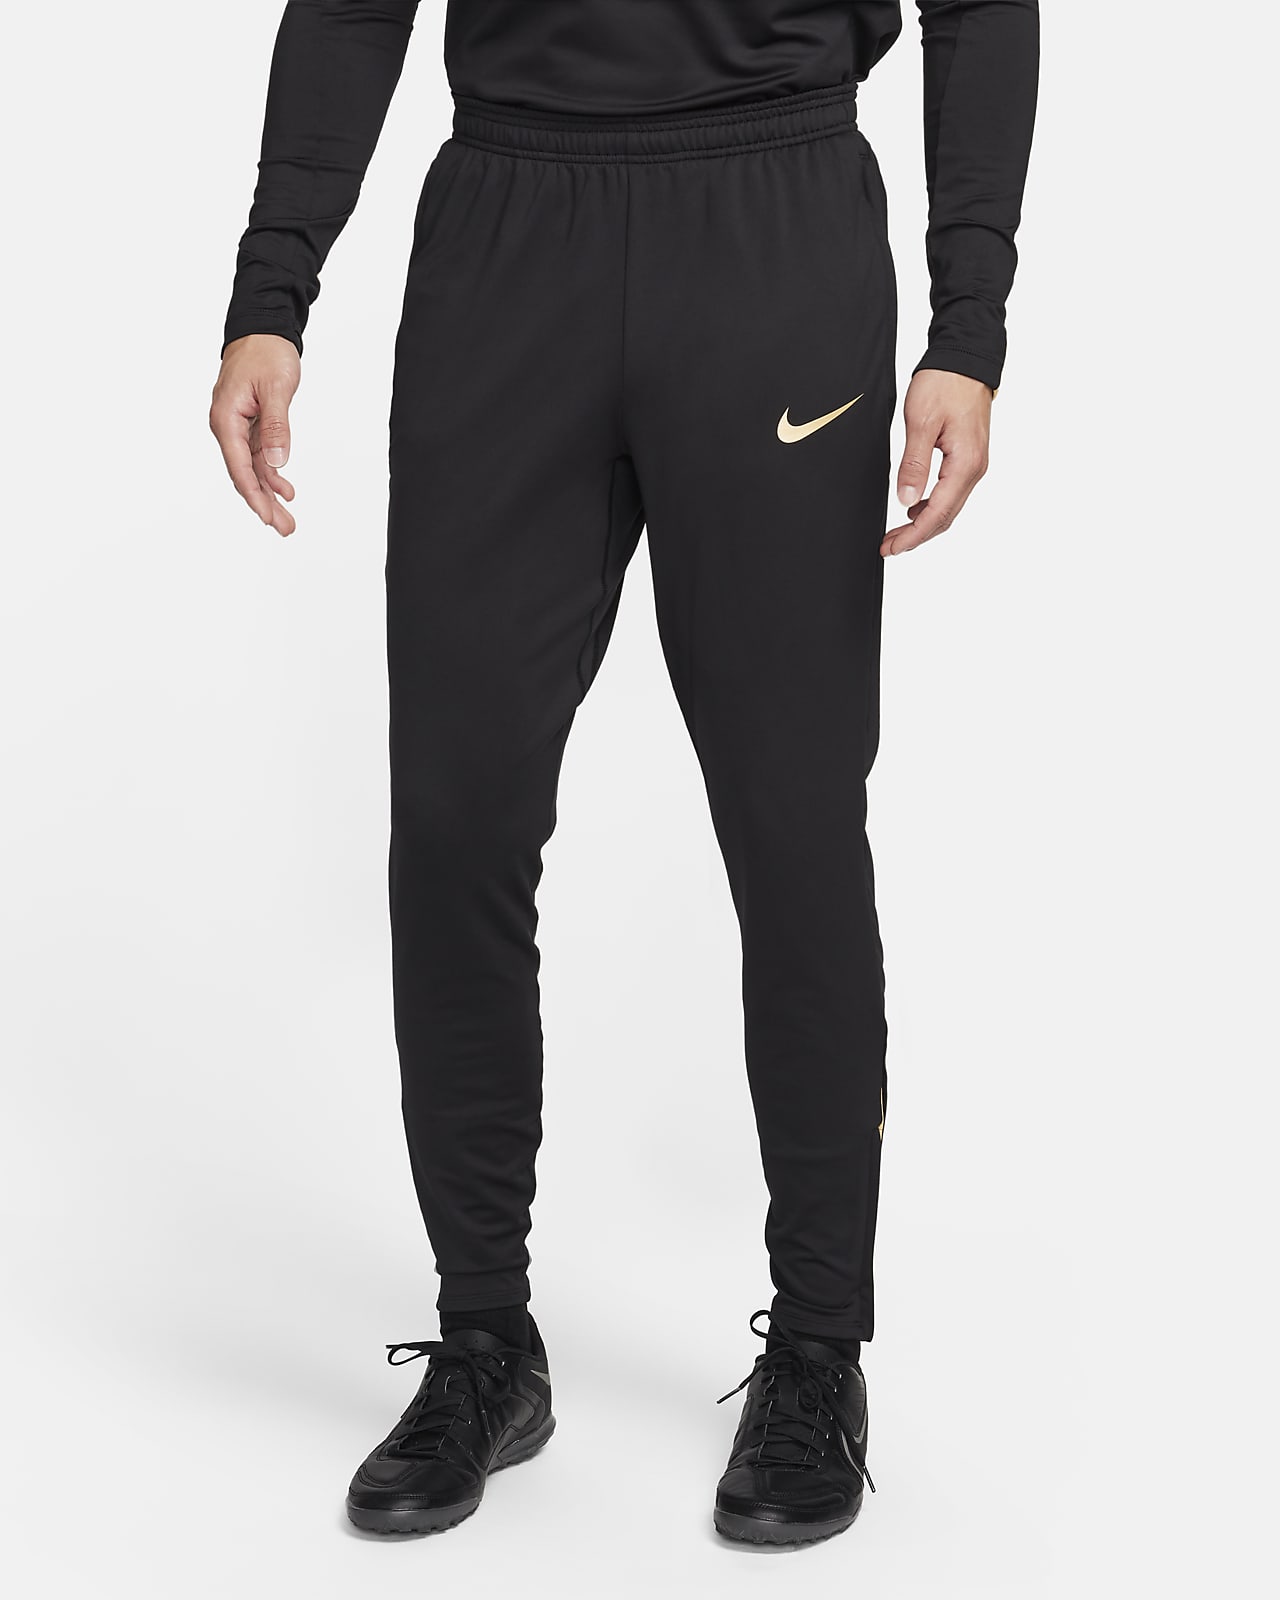 Mens Sports Trousers Football | Football Men Sports Pants | Jogging Football  Trousers - Running Pants - Aliexpress